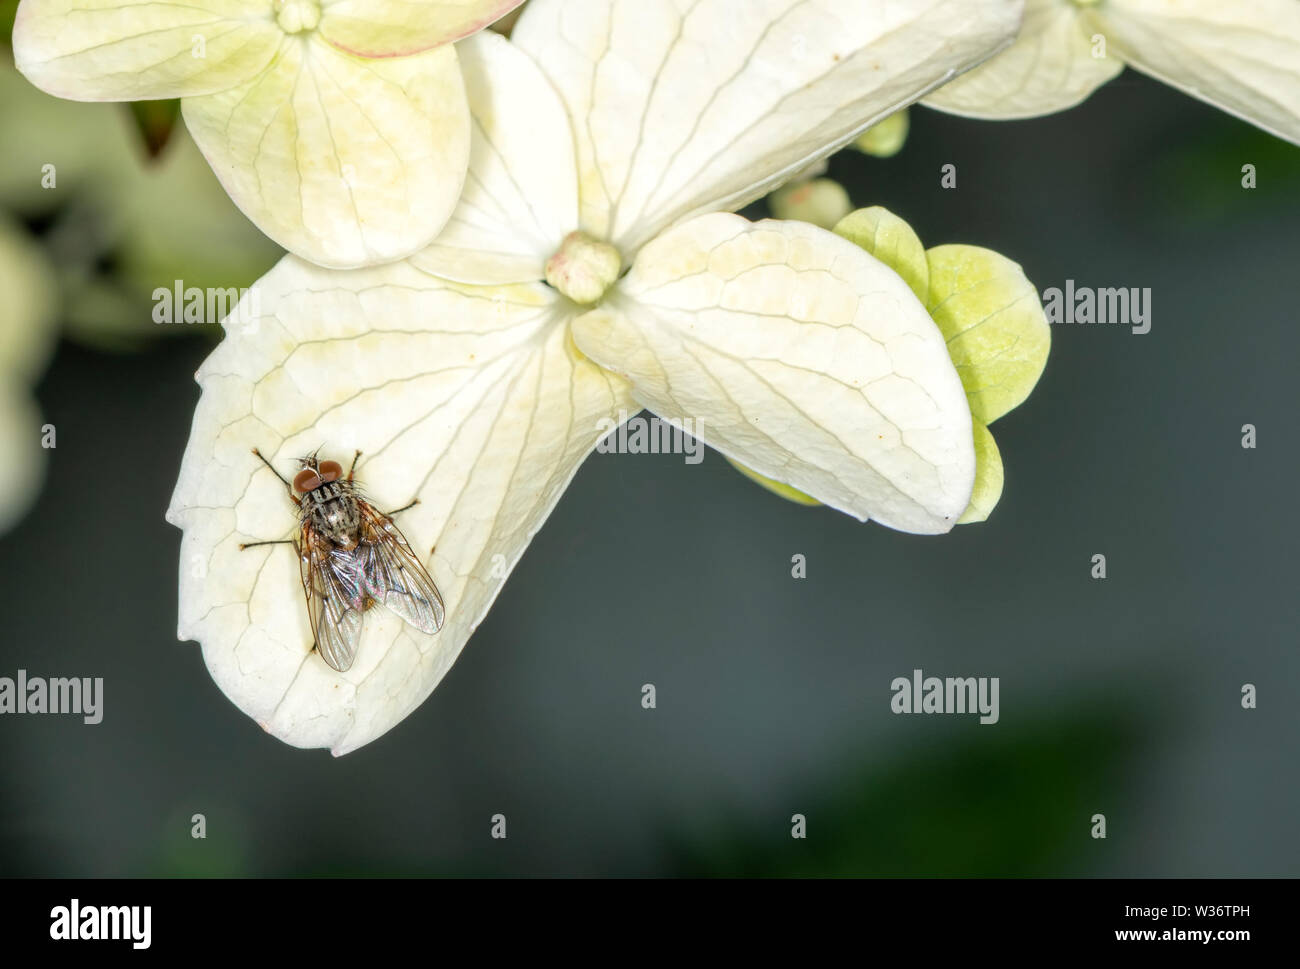 Housefly on a cream Hydrangea petal Stock Photo